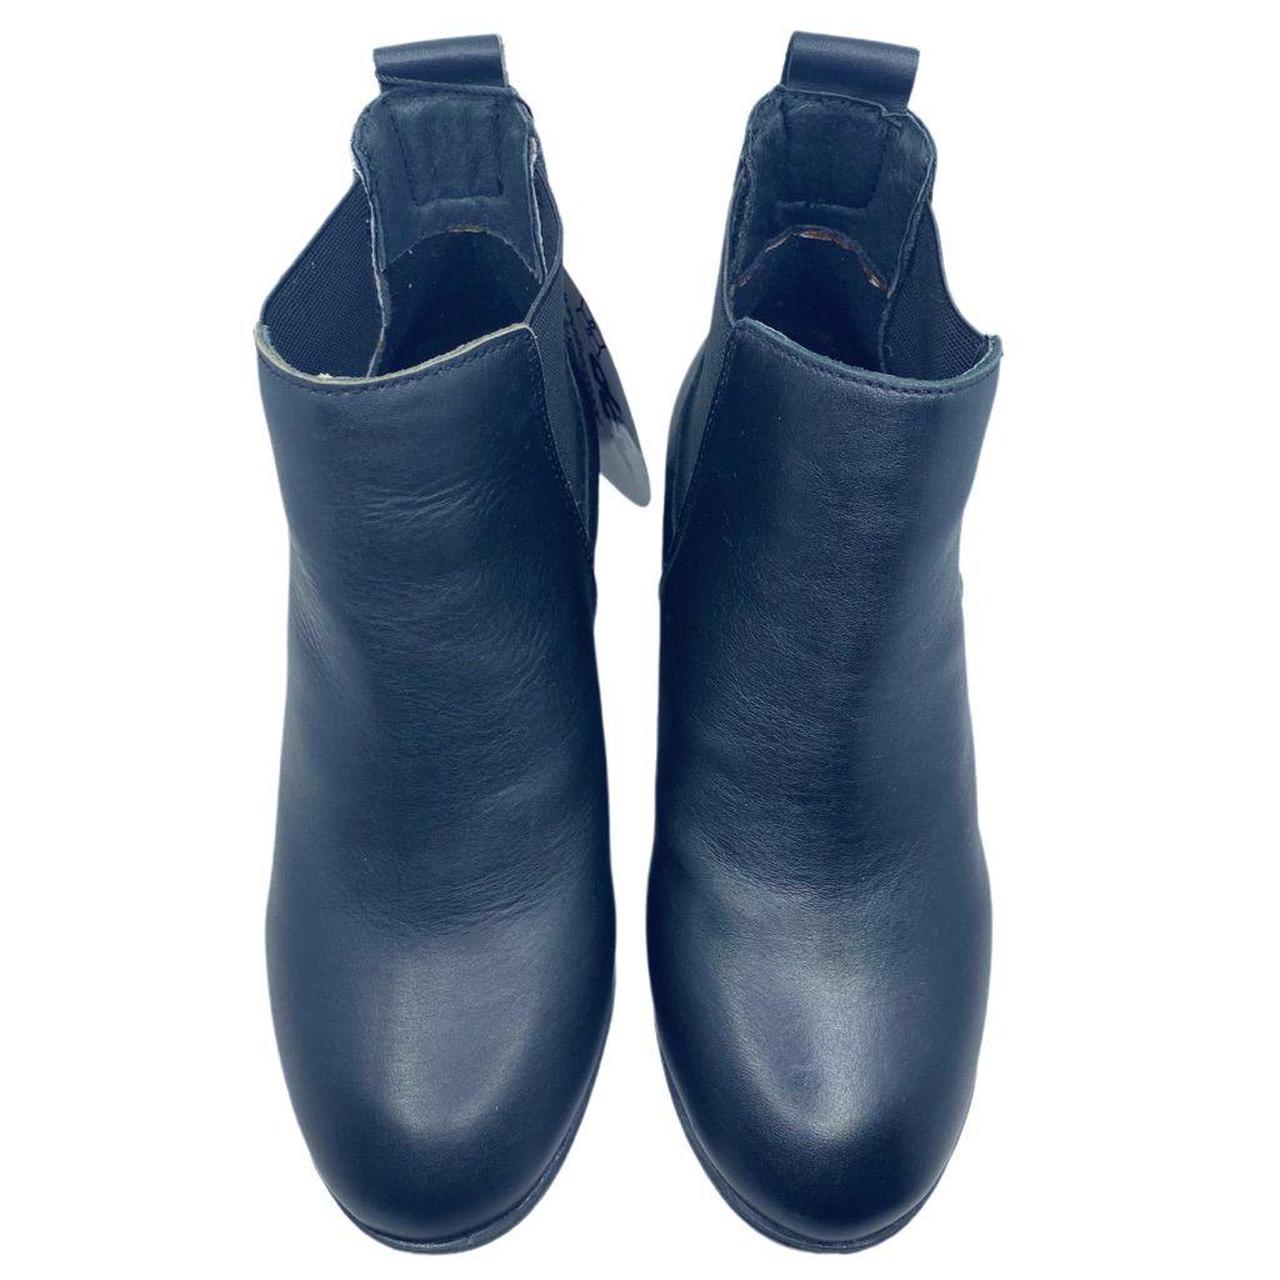 Däv Women's Black Boots (2)